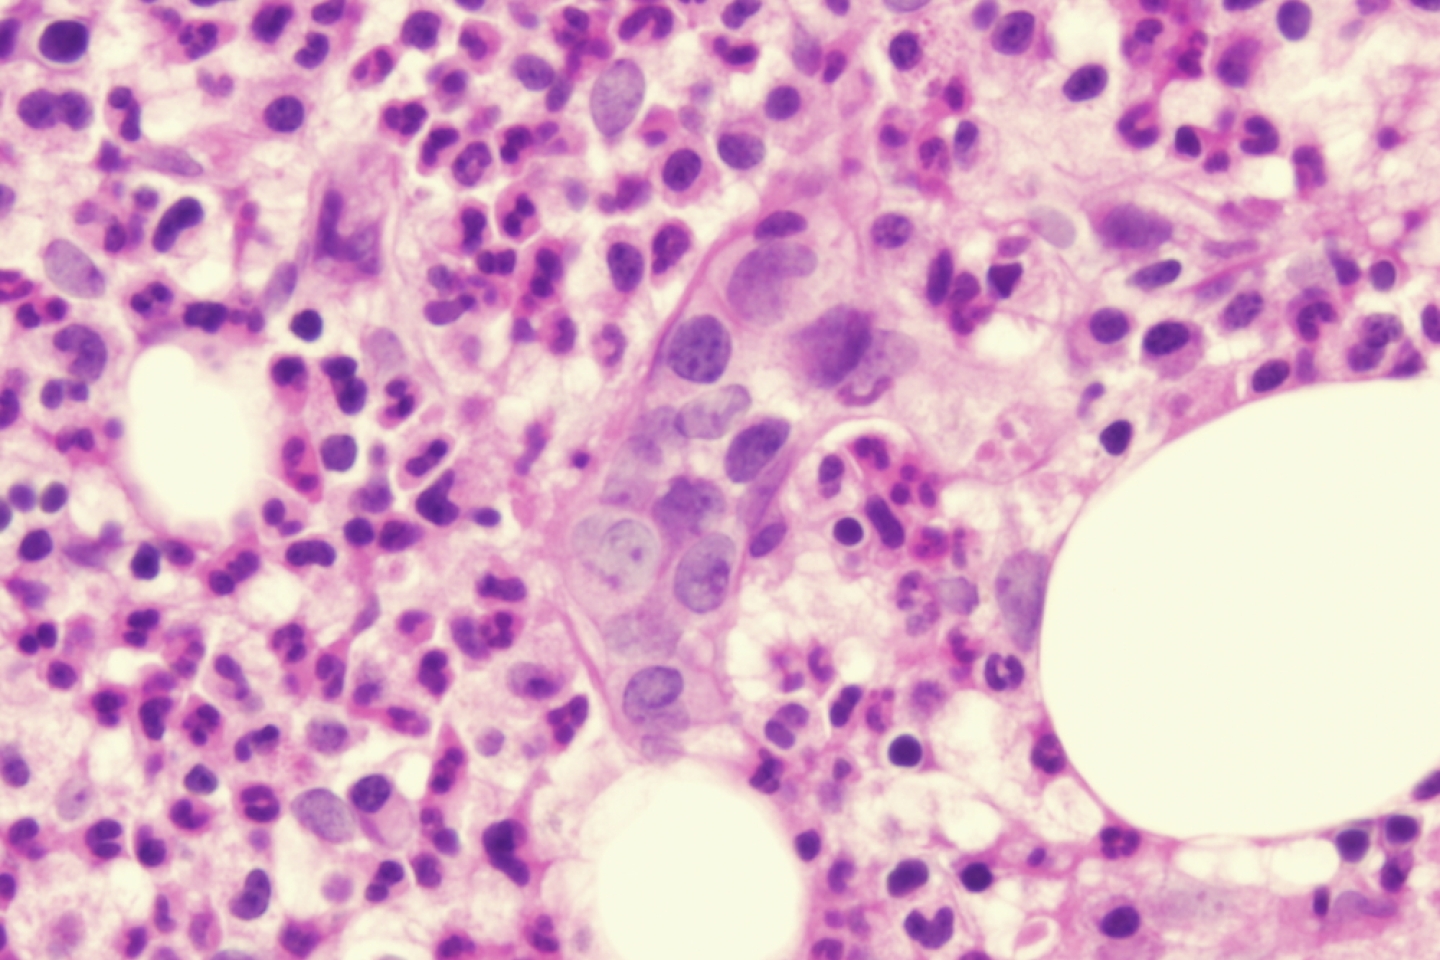 Intravascular large B cell lymphoma